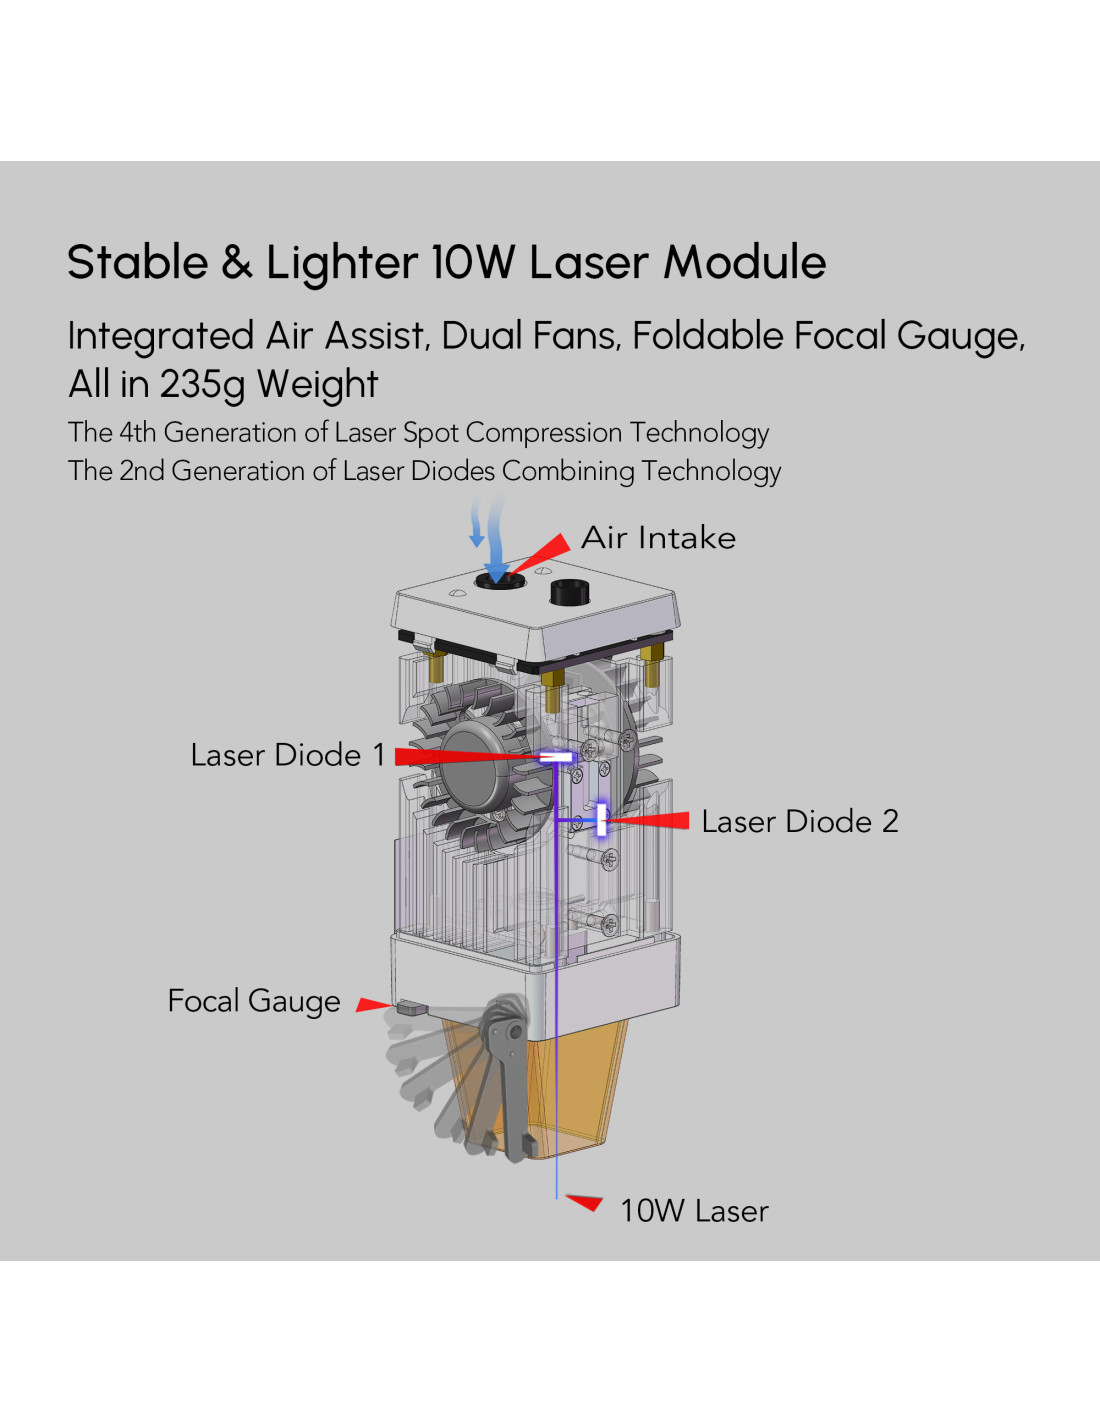 Ortur Laser Master 3 - Laser engraving and cutting machine - 10W